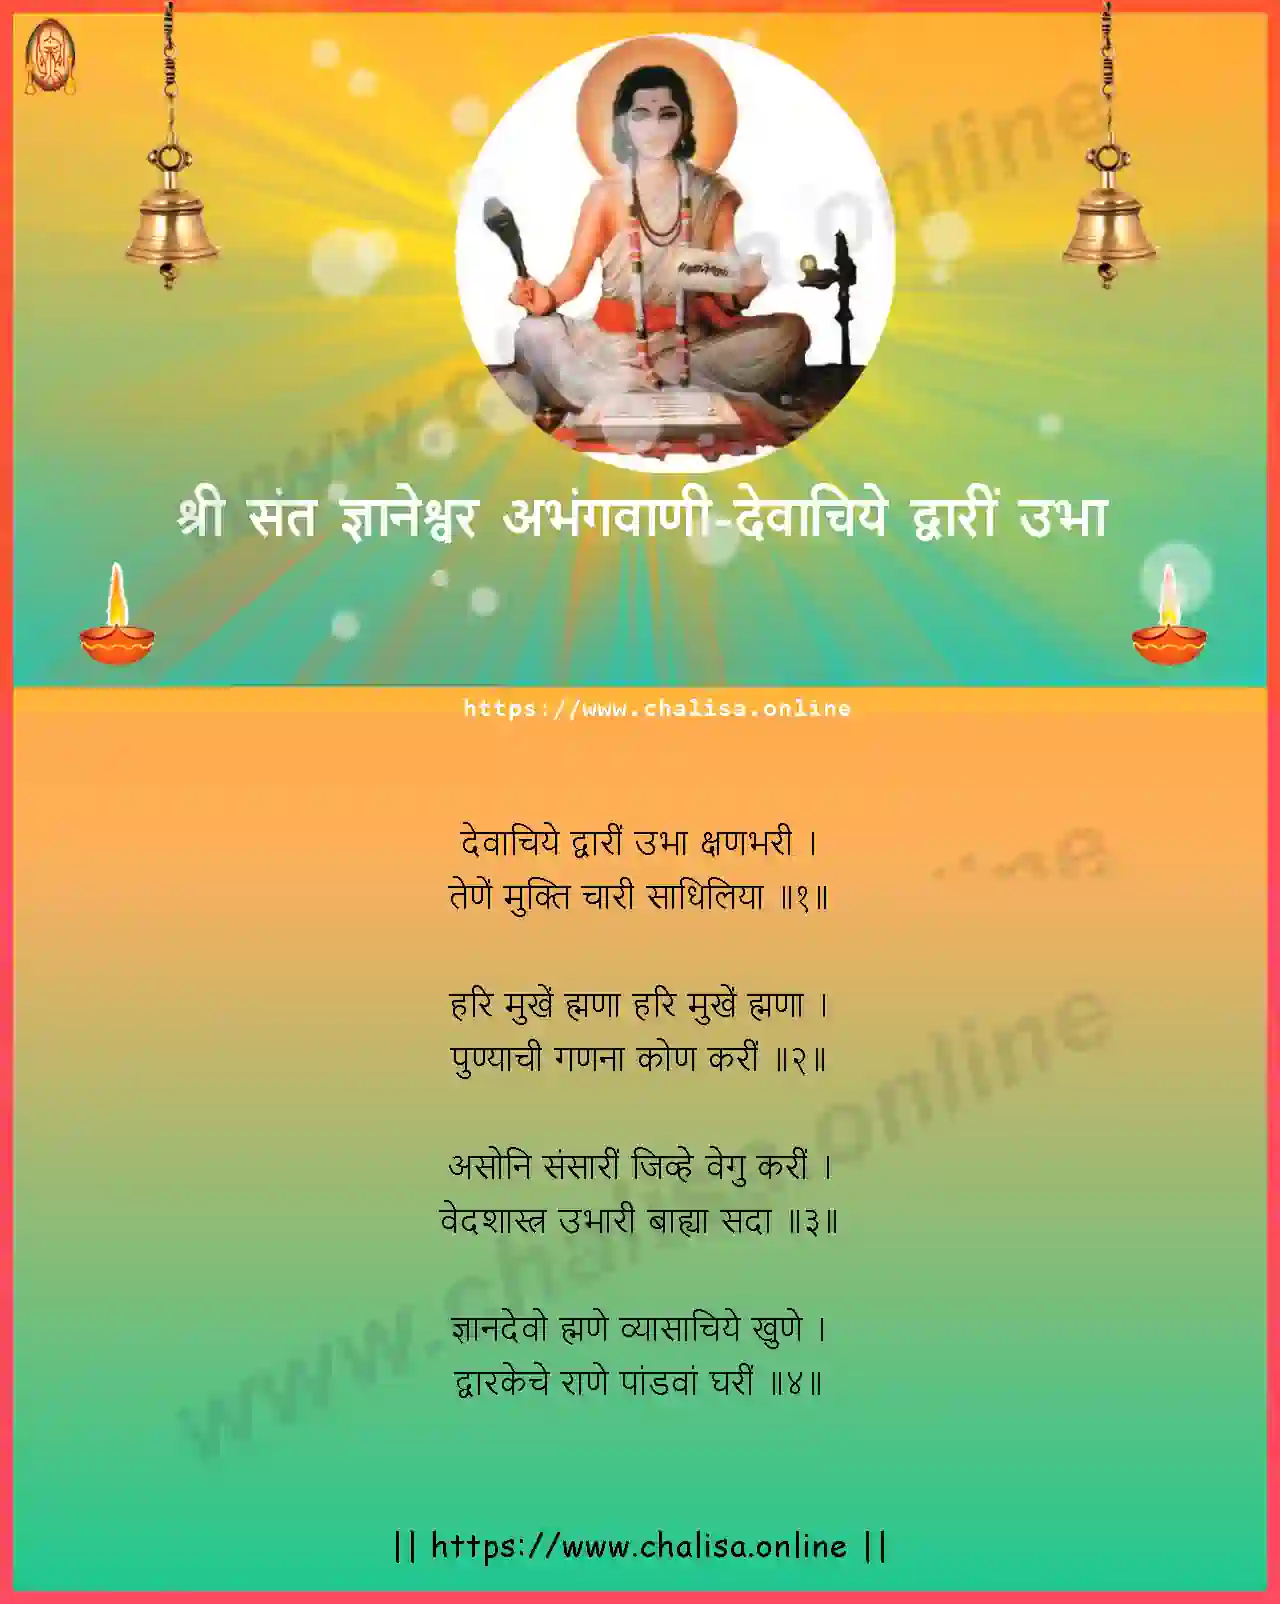 devachiye-dwari-ubha-shri-sant-dnyaneshwar-abhang-marathi-lyrics-download